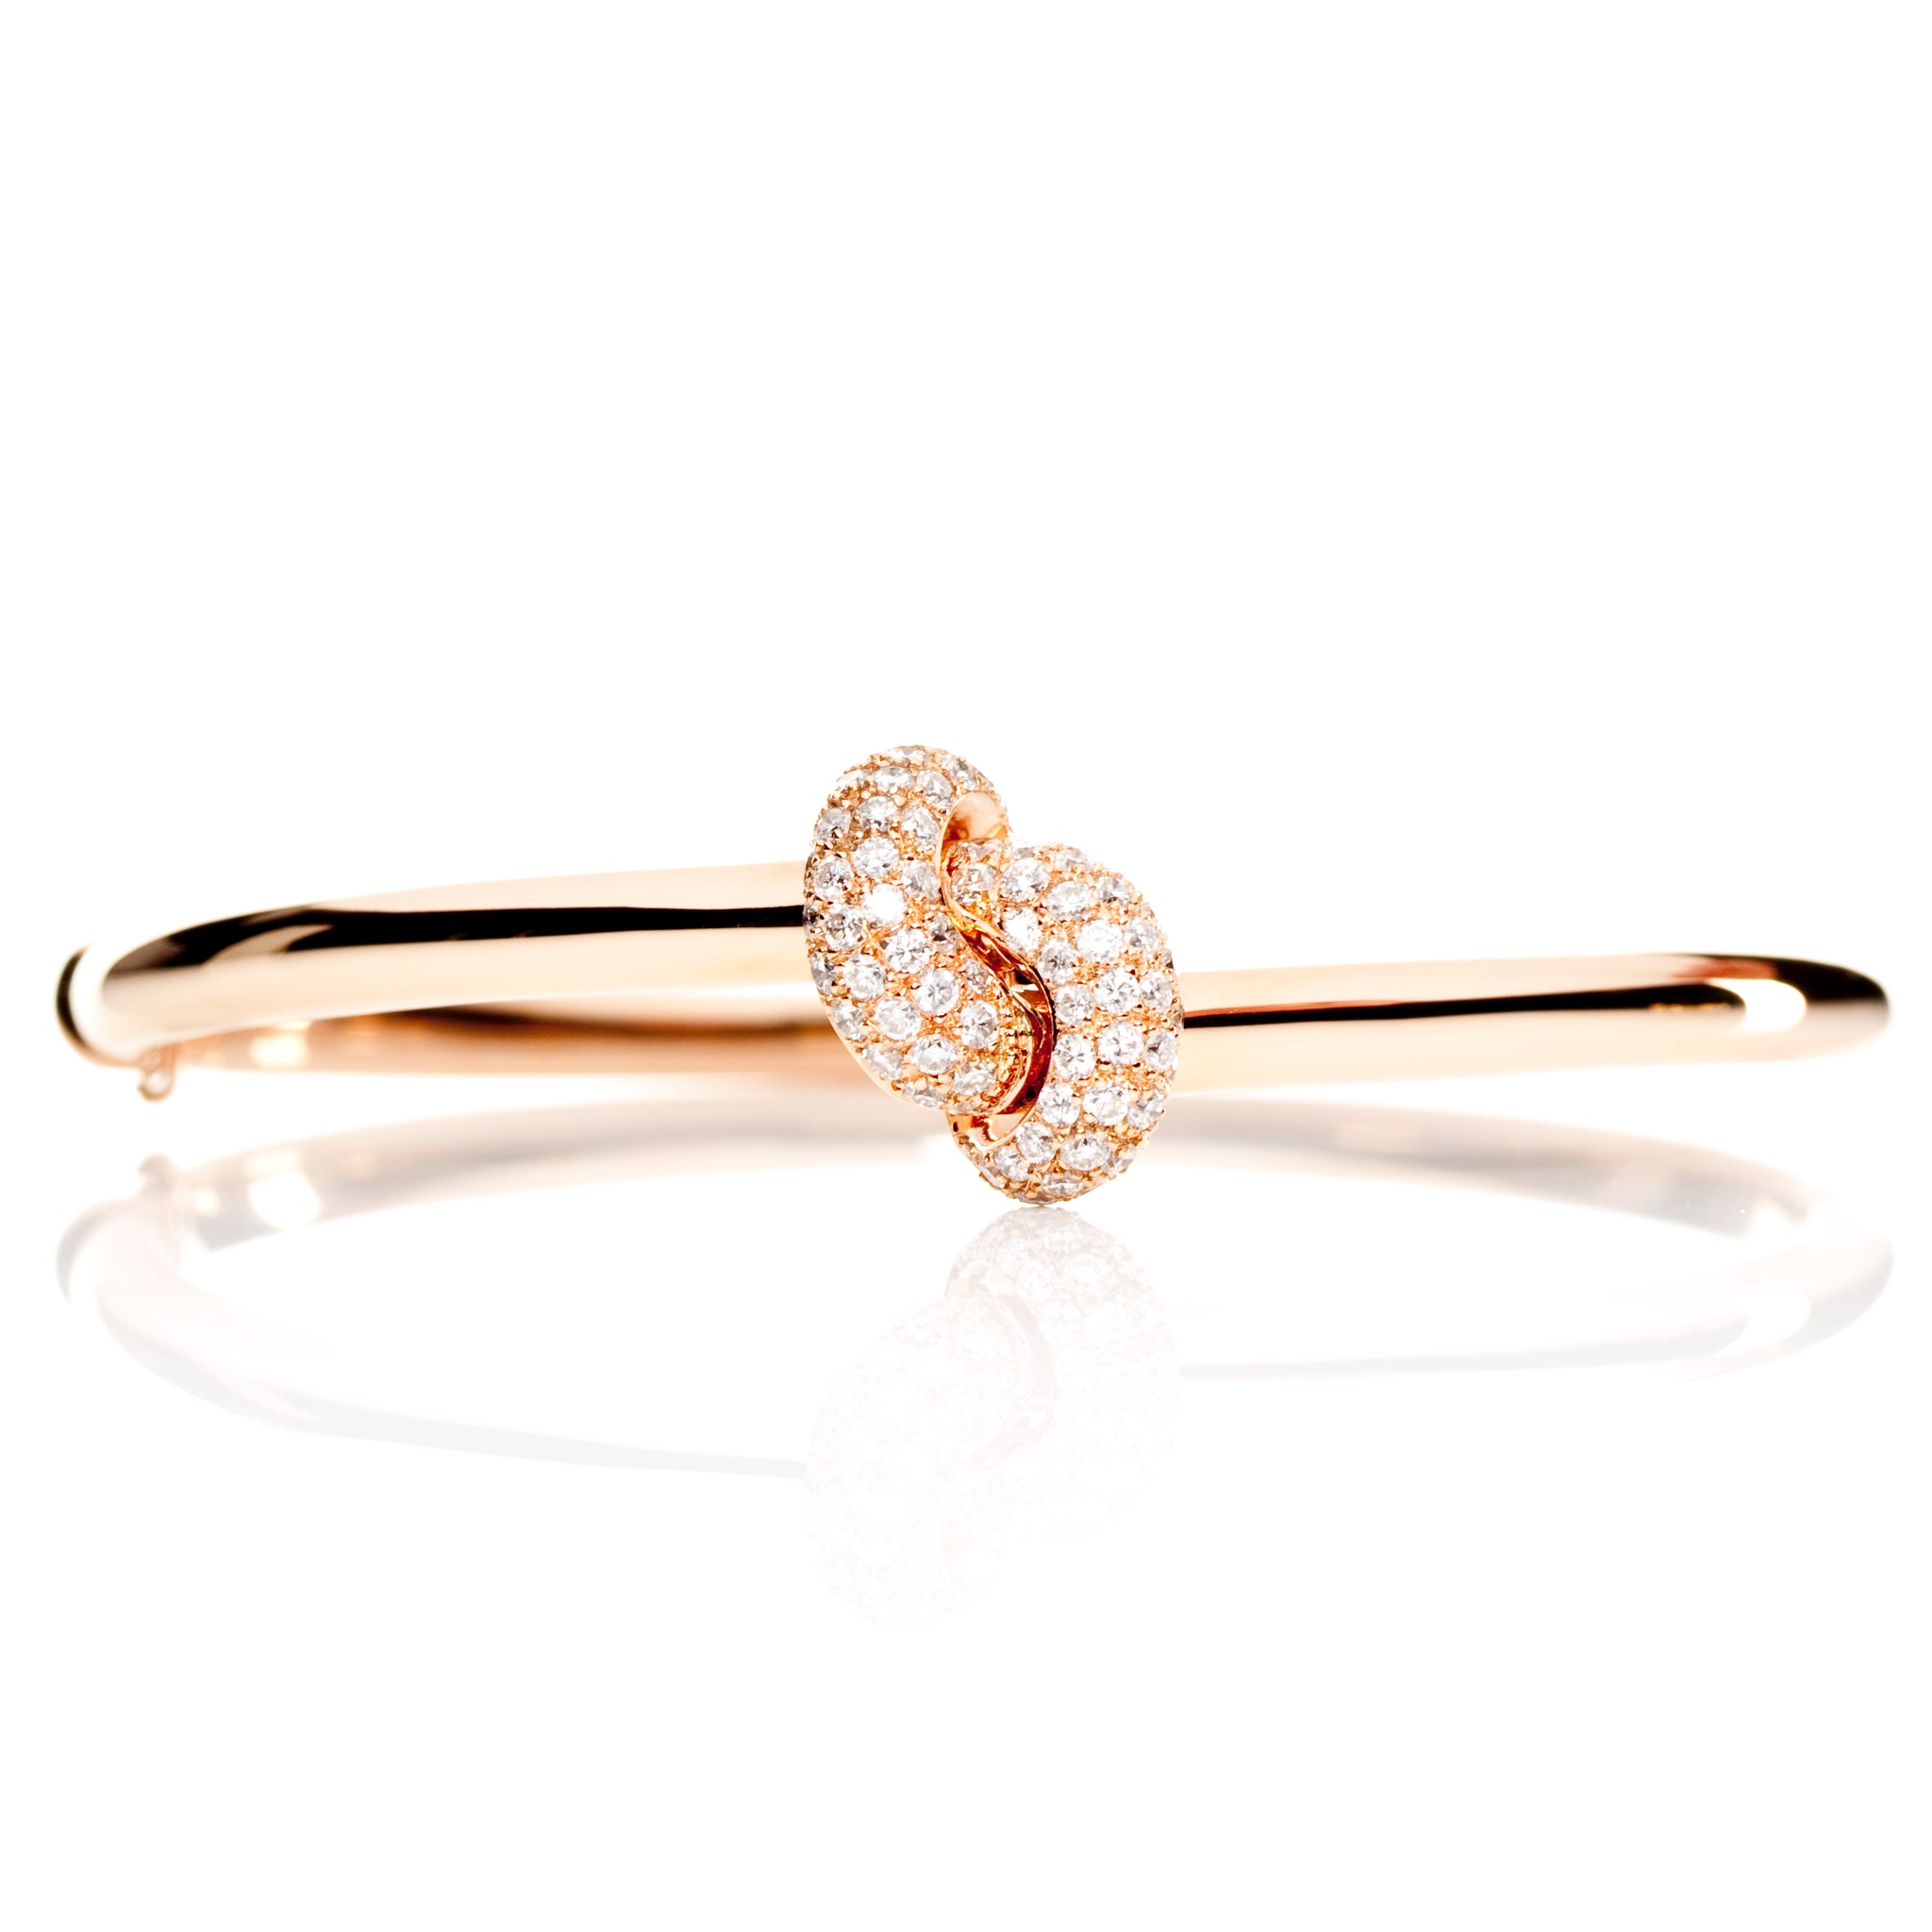 The Love Knot Bracelet Pink Gold Diamond The Love Knot By Coralie